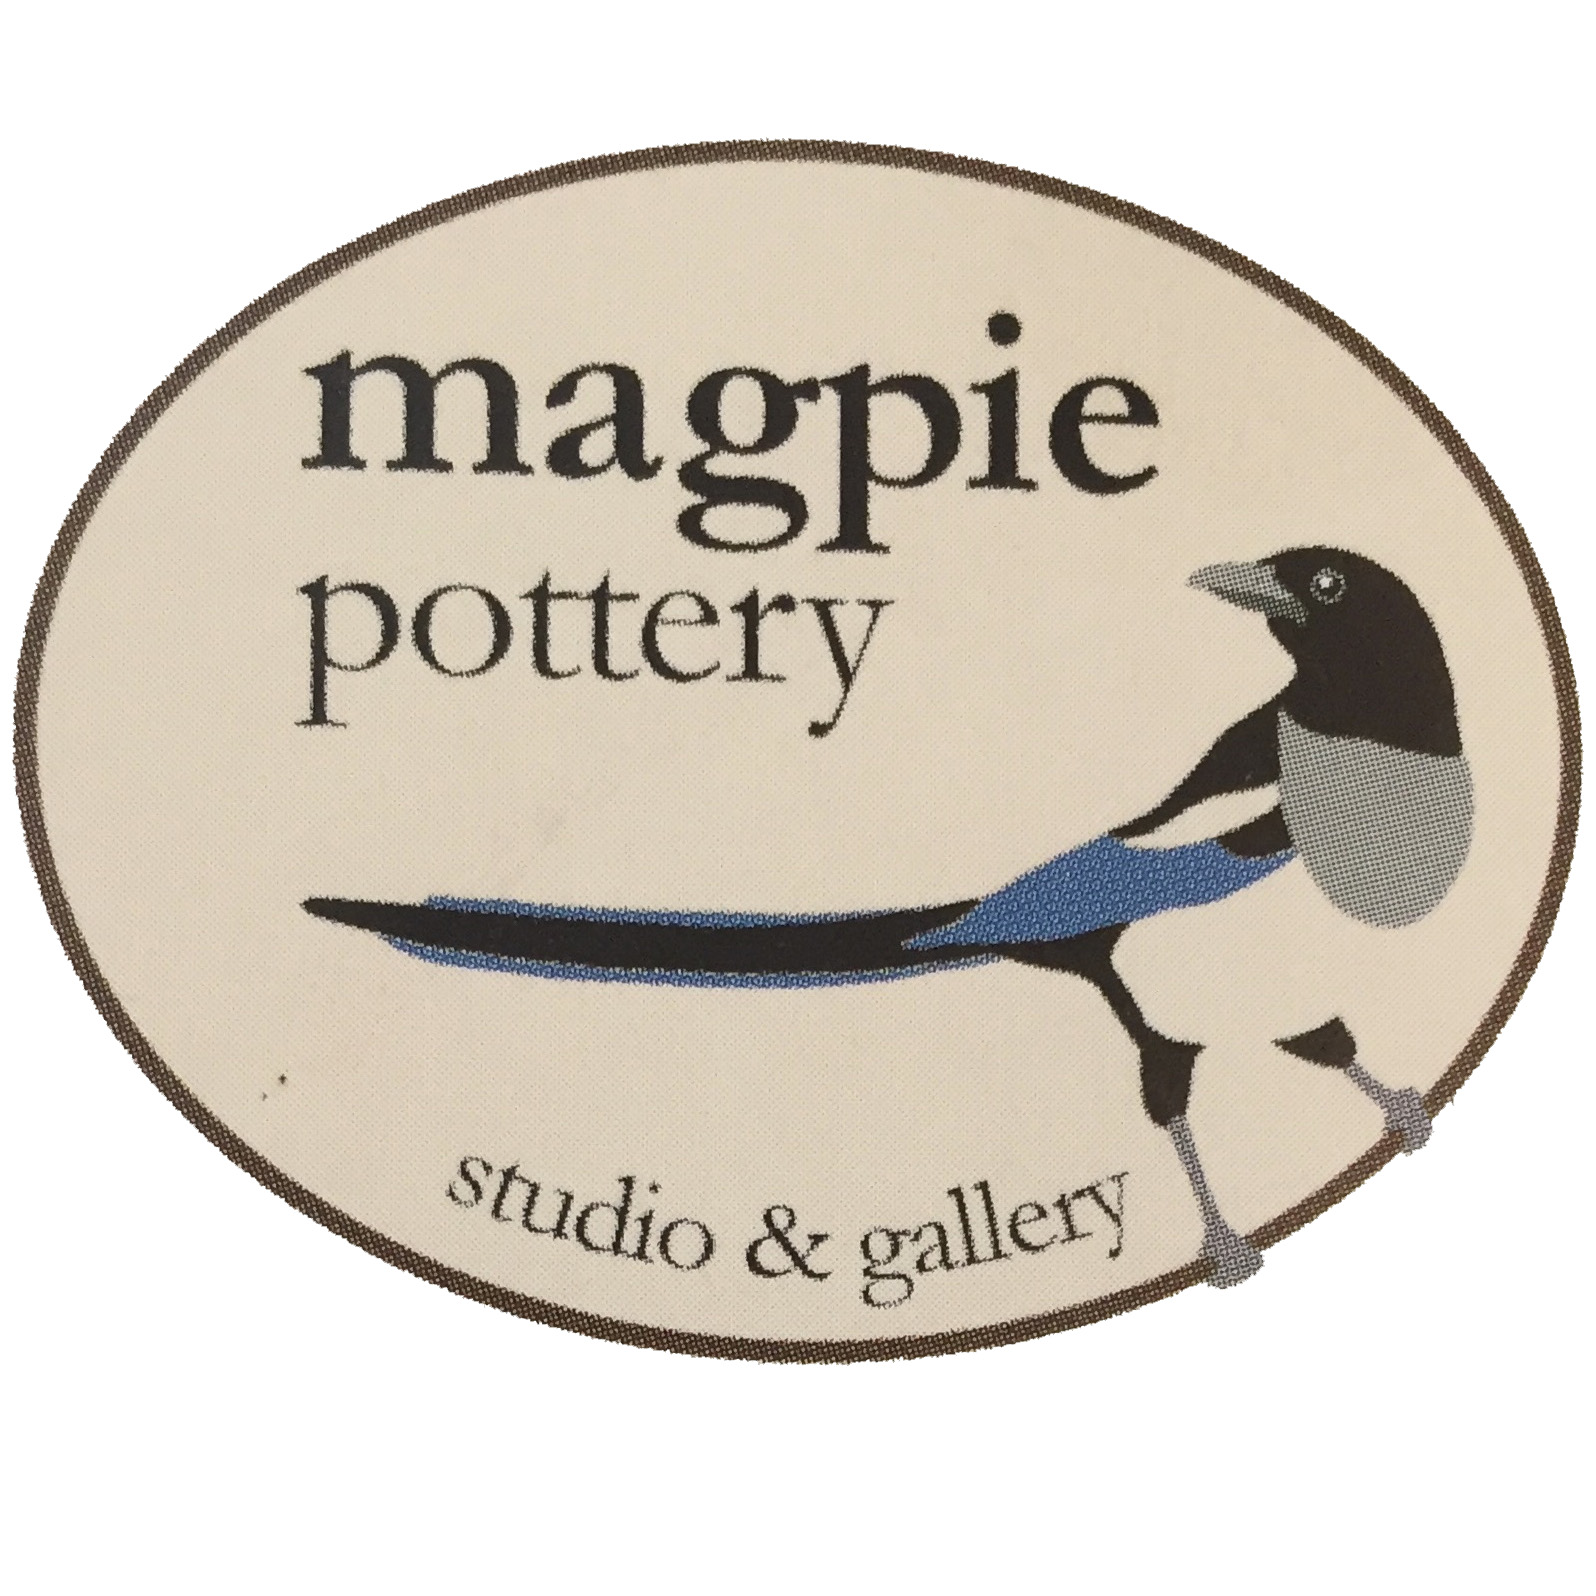 Magpie Pottery Studio & Gallery